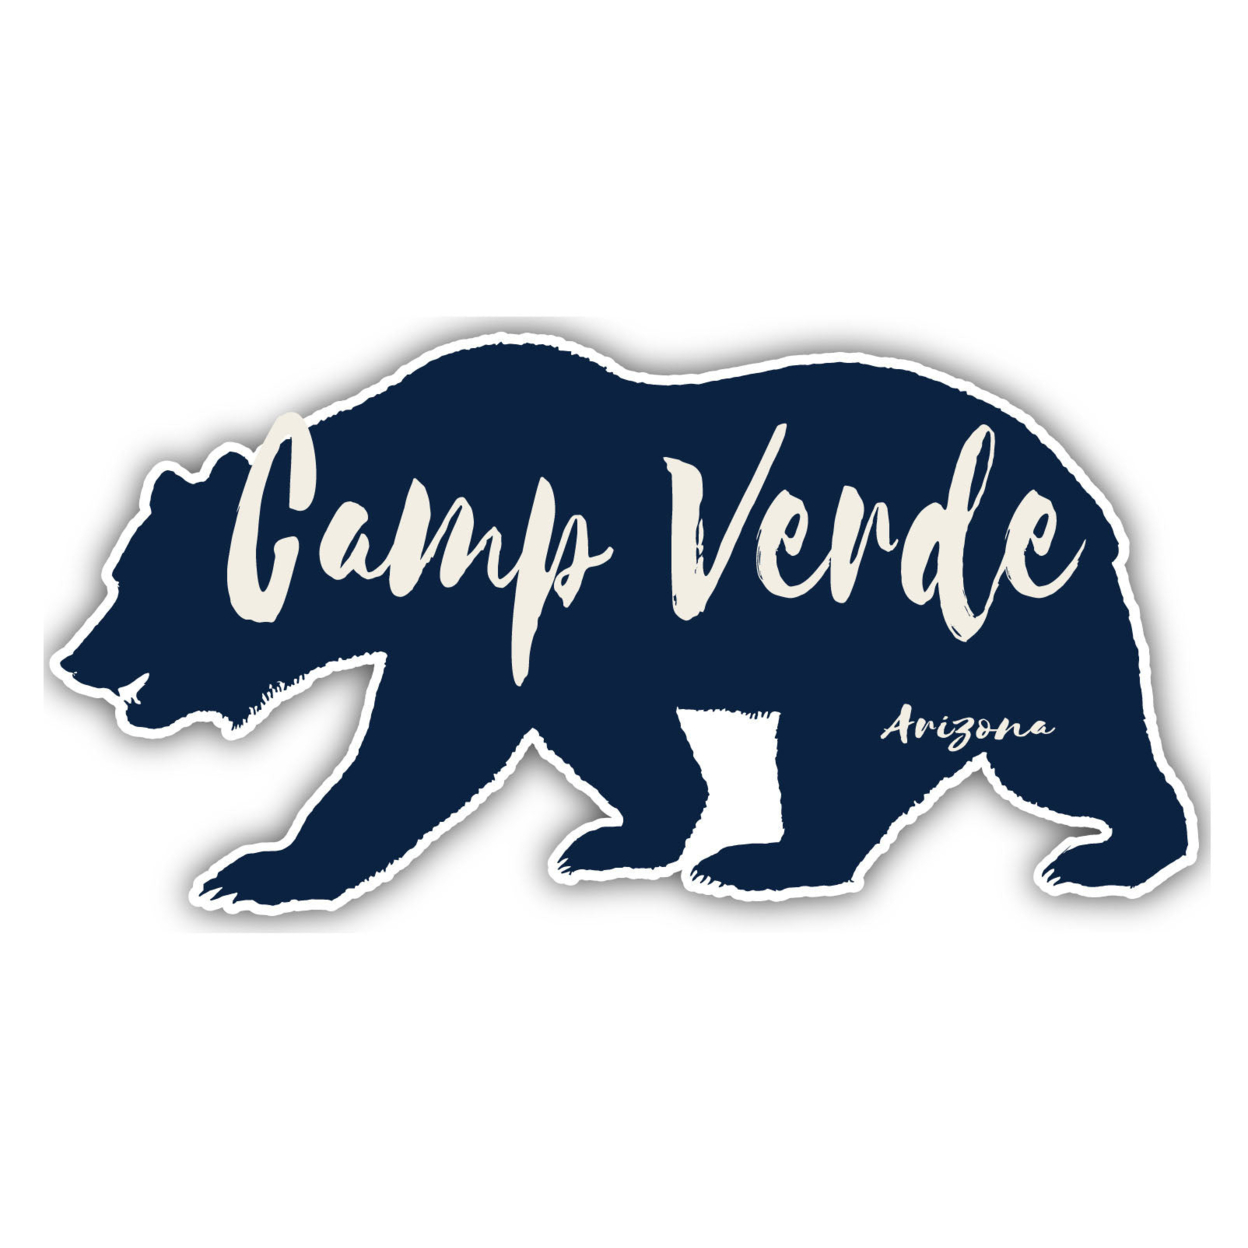 Camp Verde Arizona Souvenir Decorative Stickers (Choose Theme And Size) - 4-Pack, 4-Inch, Tent